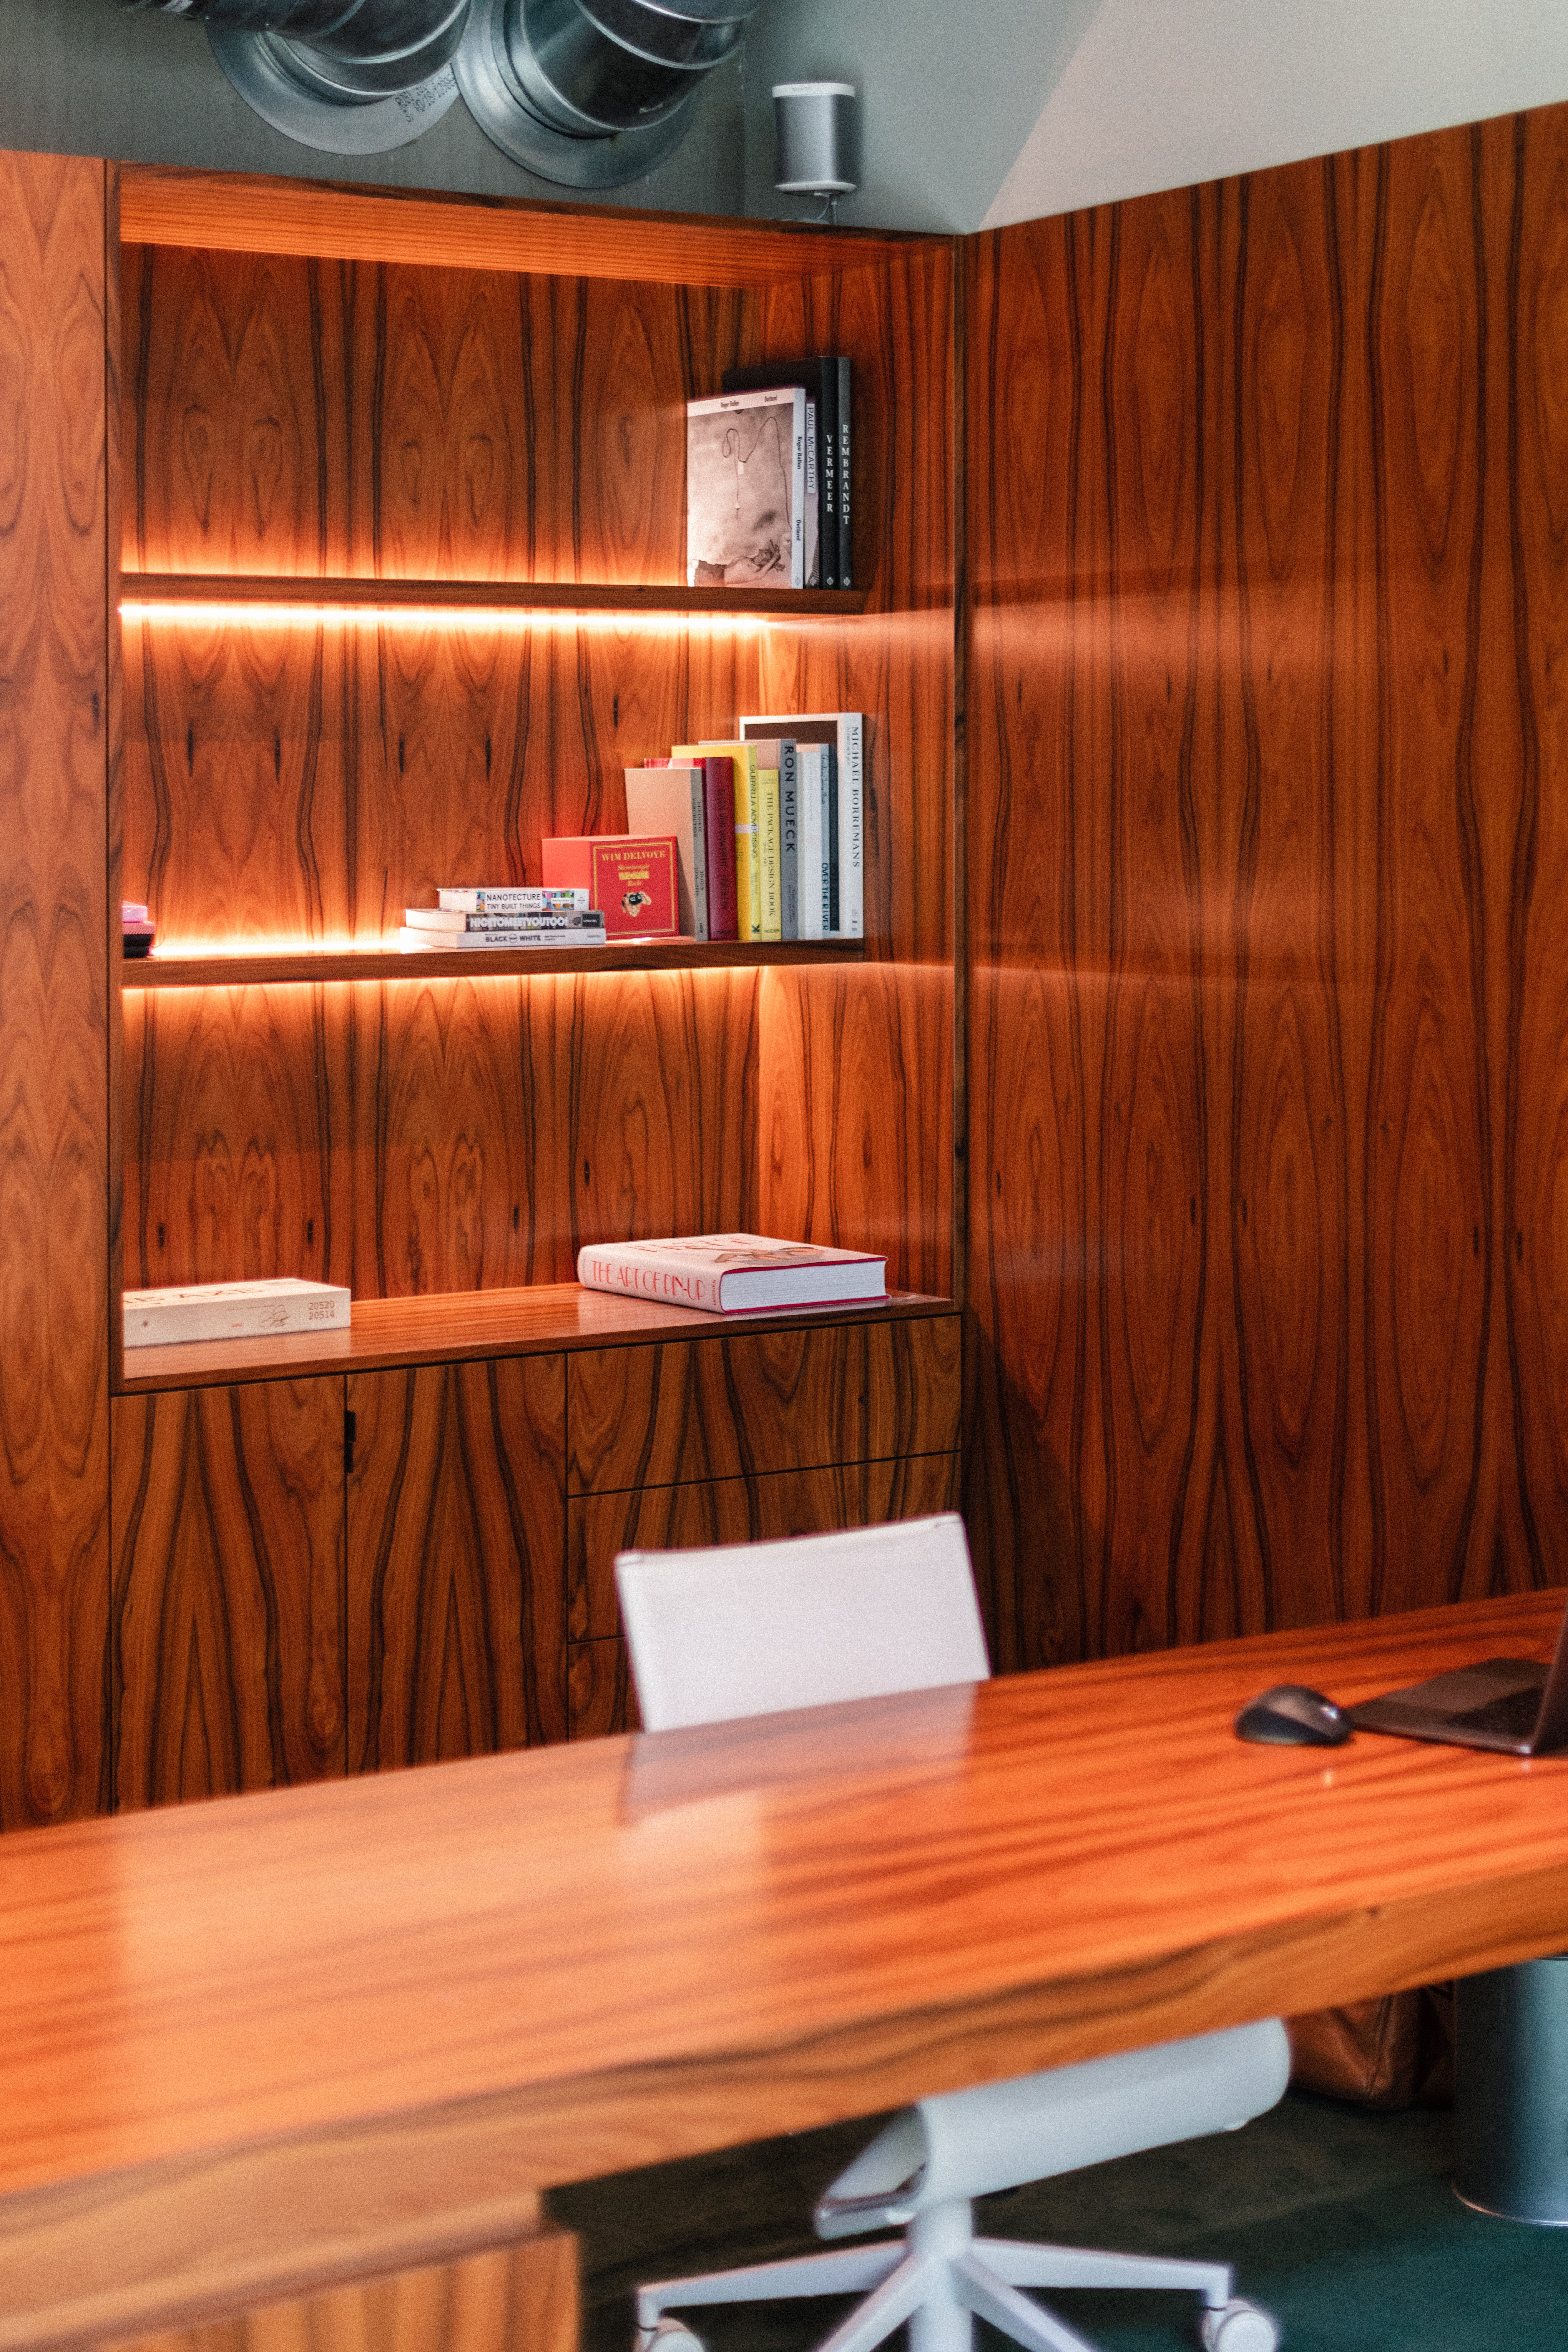 palissander santos - palissander santos office - wood office - wood wall office - wood desk office - wood desk